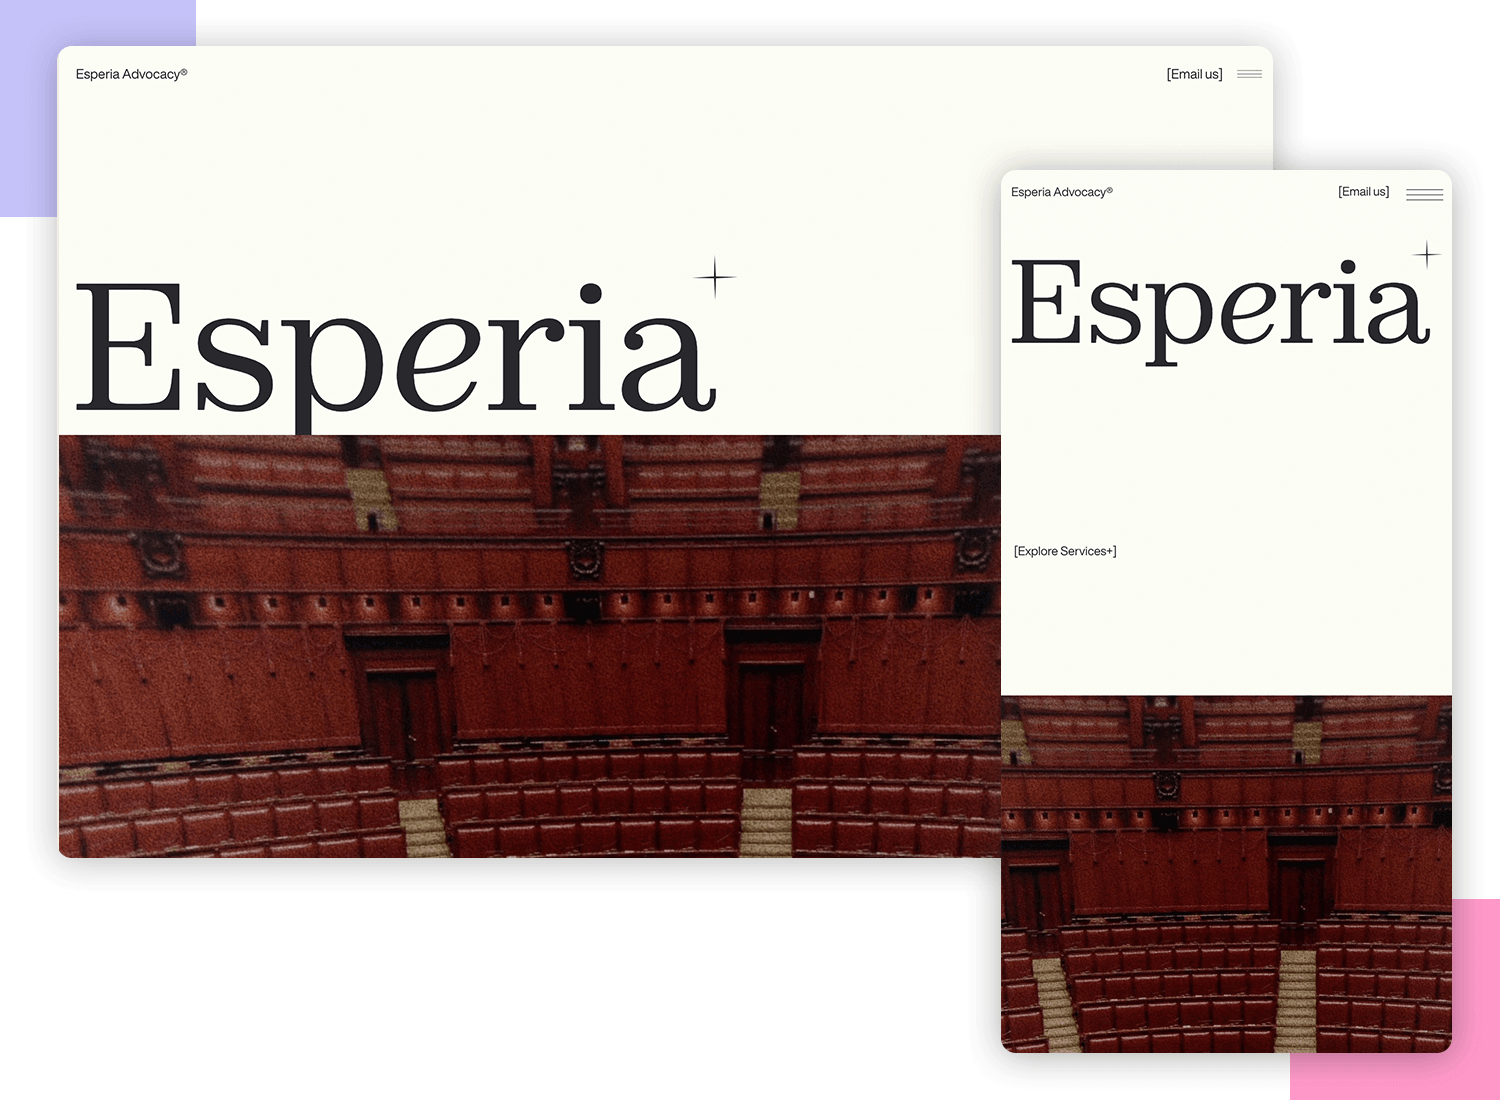 Esperia Advocacy responsive website example on desktop and mobile